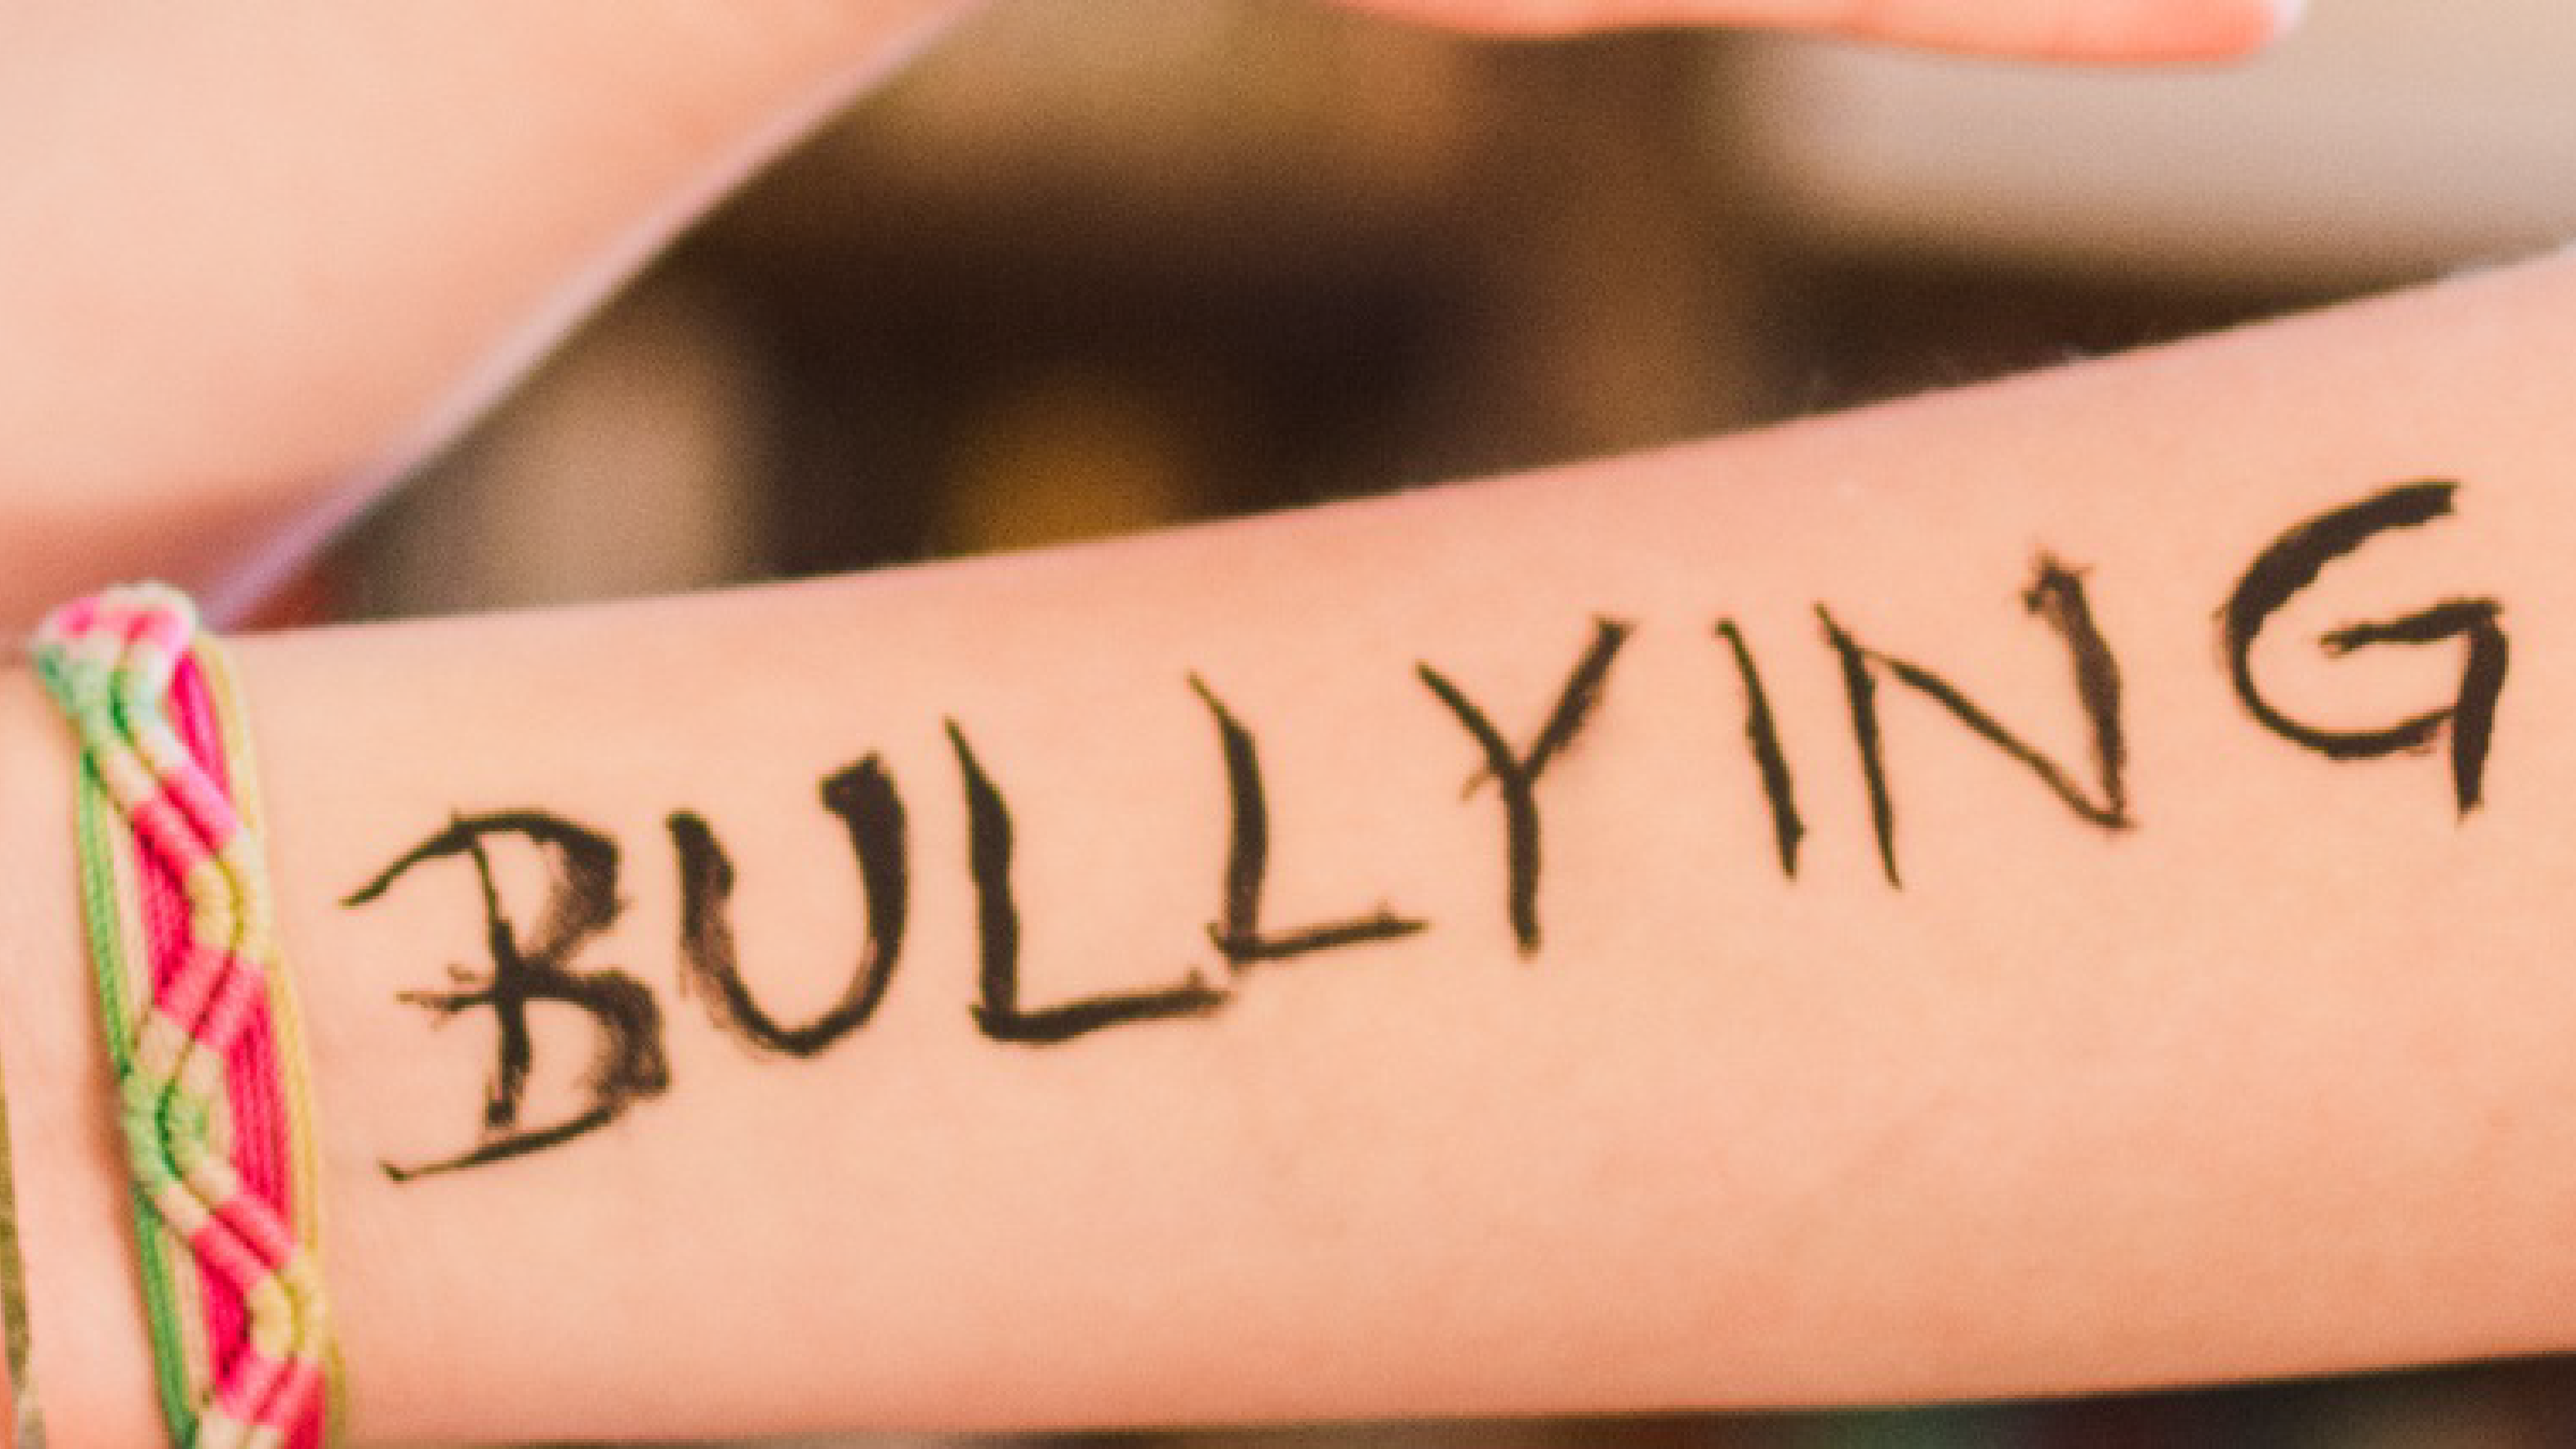 Bullying nas escolas: como identificar e combater?